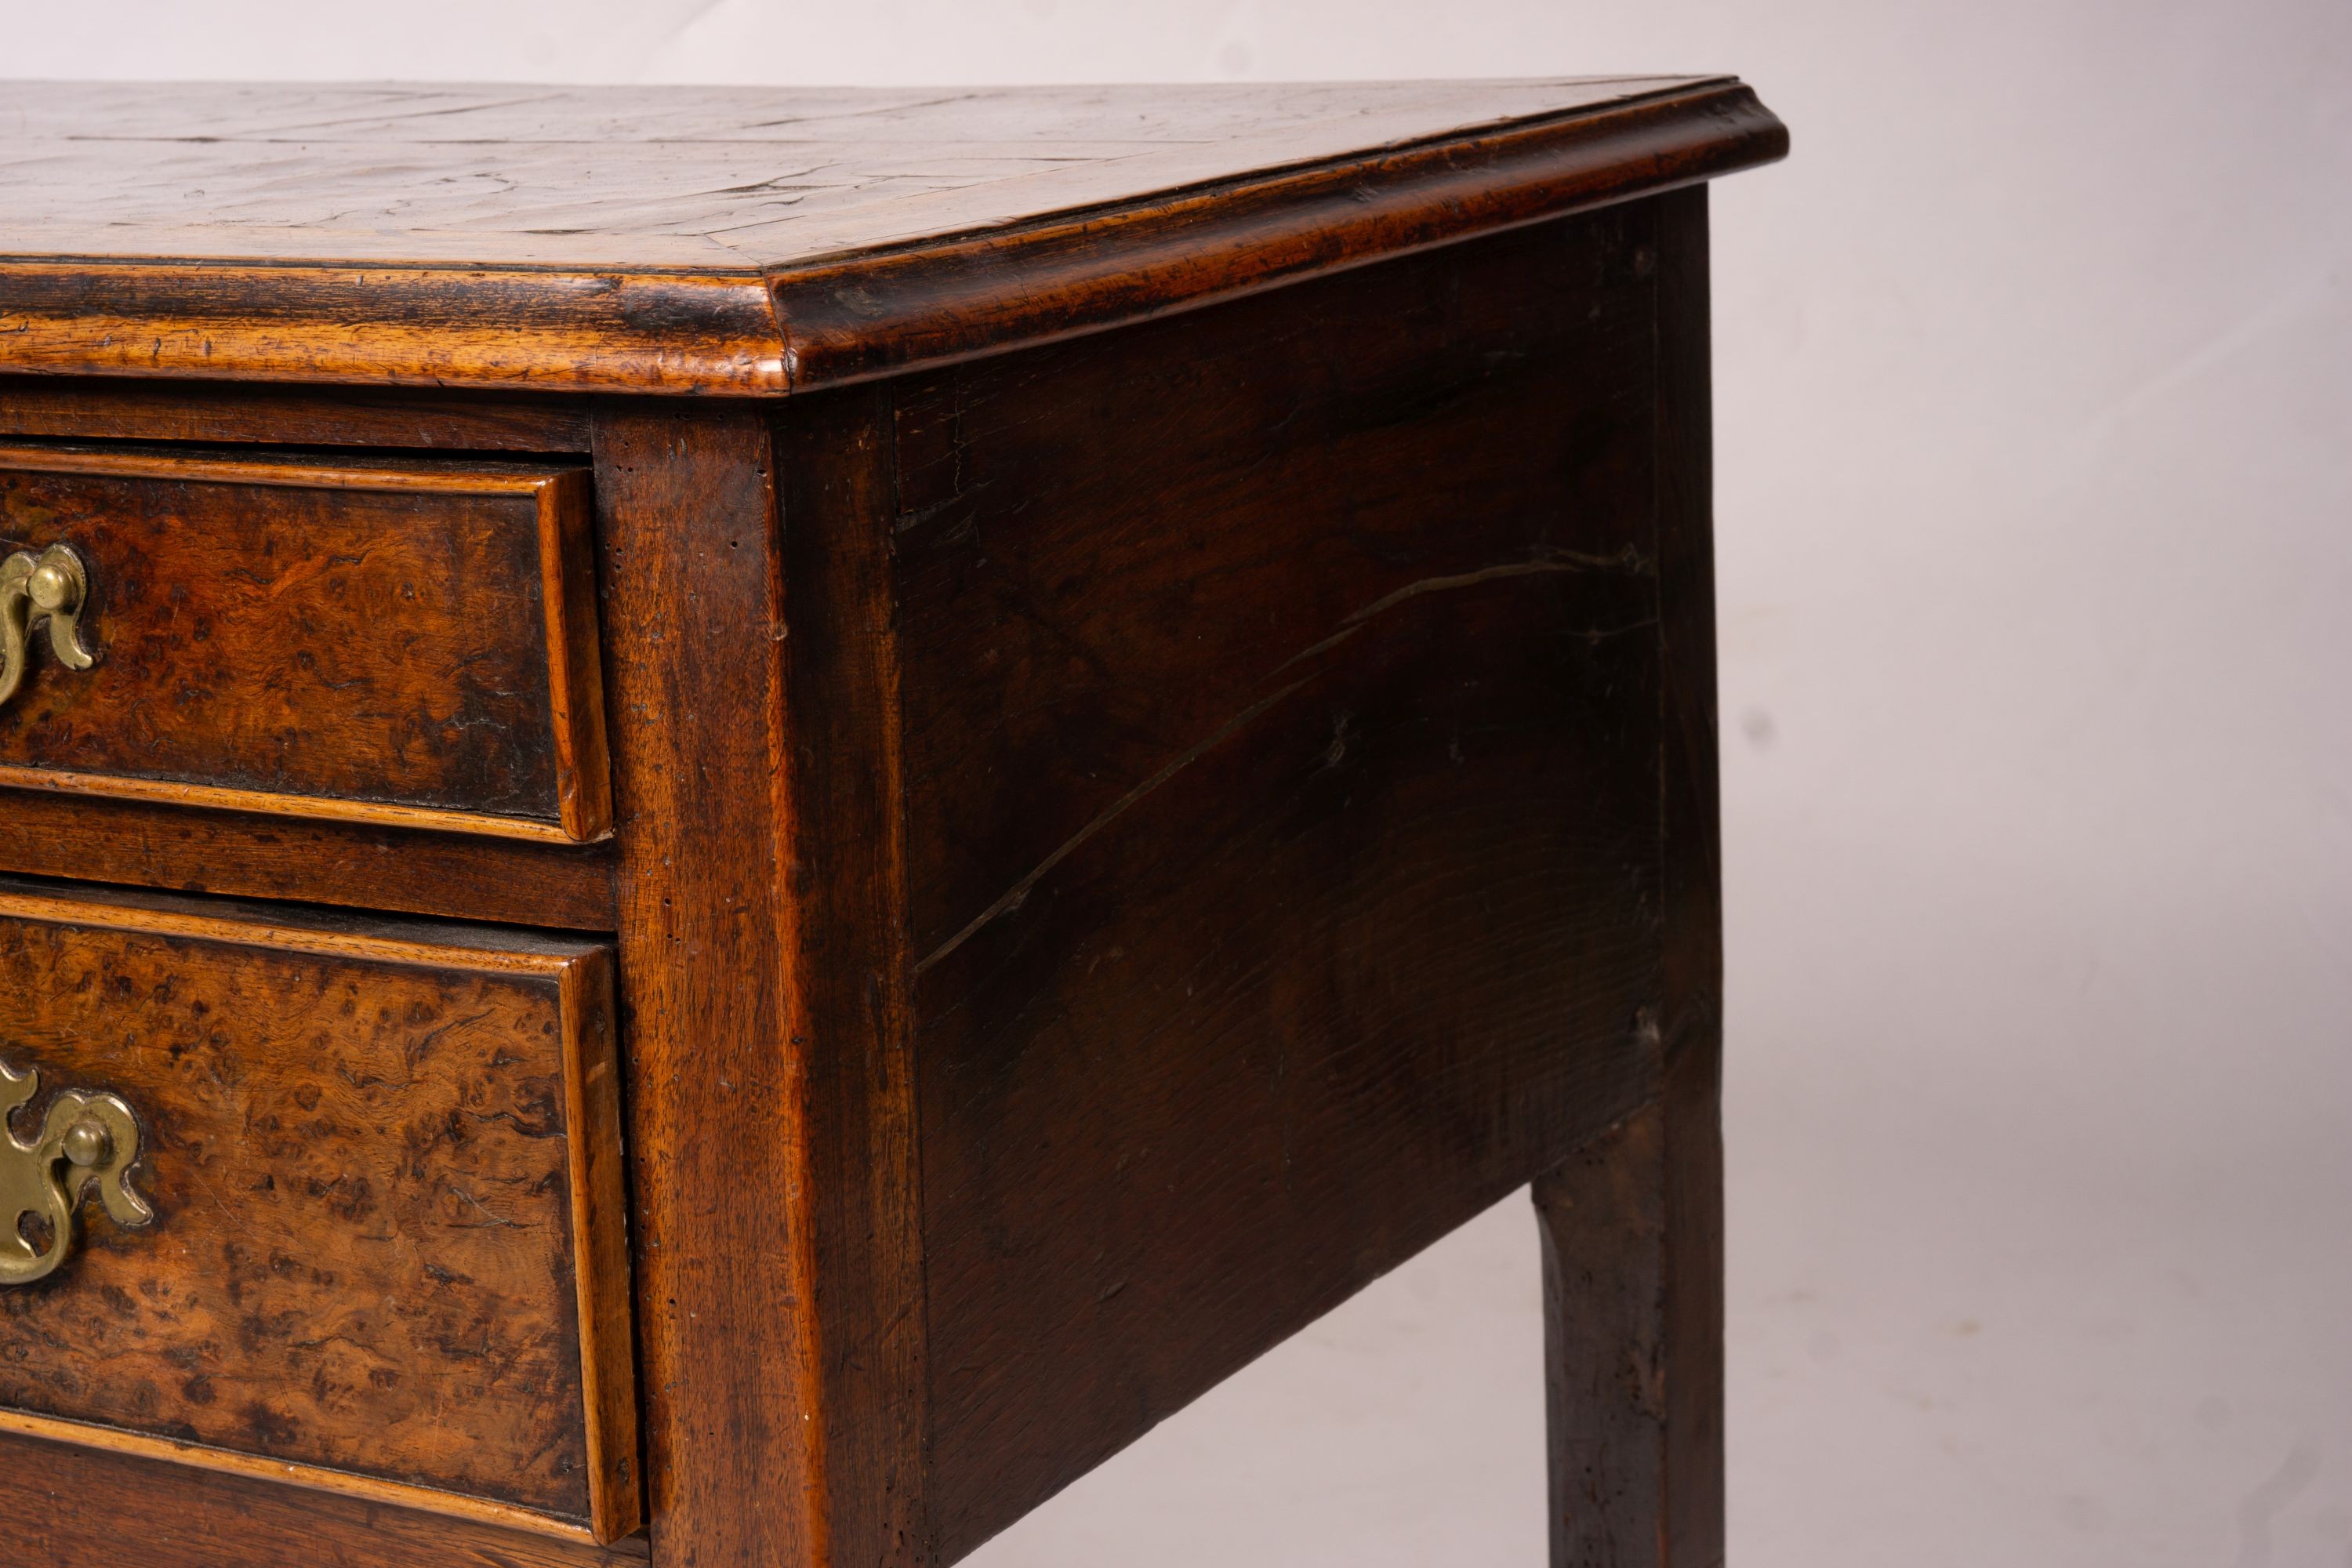 A George III oak and pollard oak three drawer side table, width 83cm, depth 51cm, height 72cm